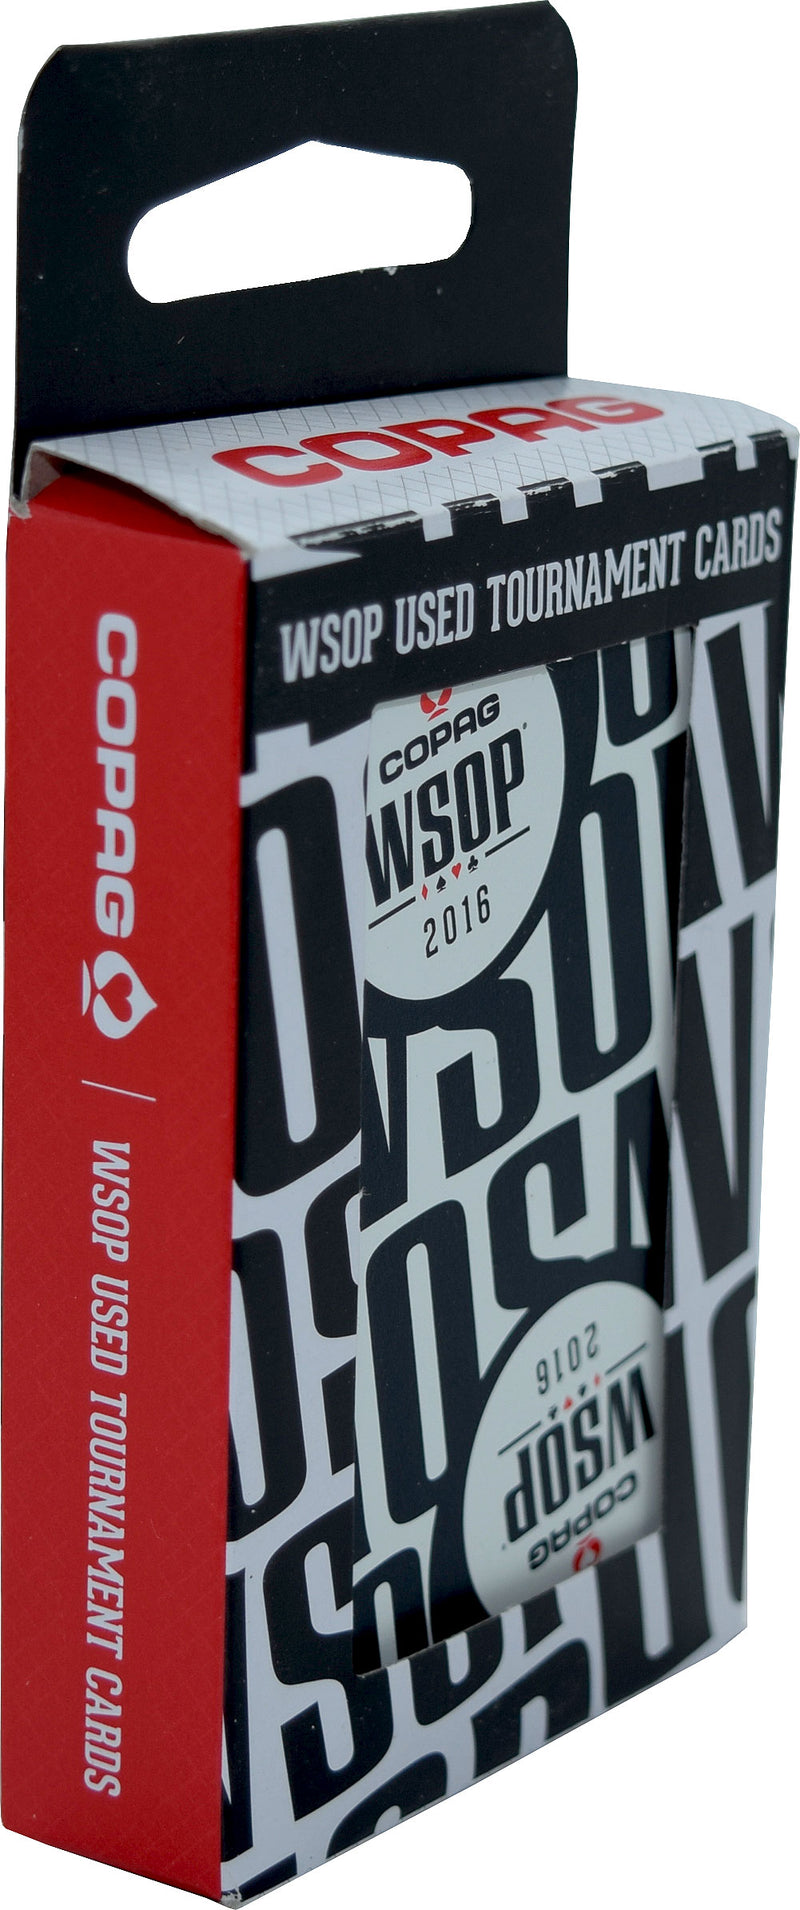 Authentic Black Deck Dealt at WSOP Final Table Used Copag Plastic Playing Cards Bridge Standard Index